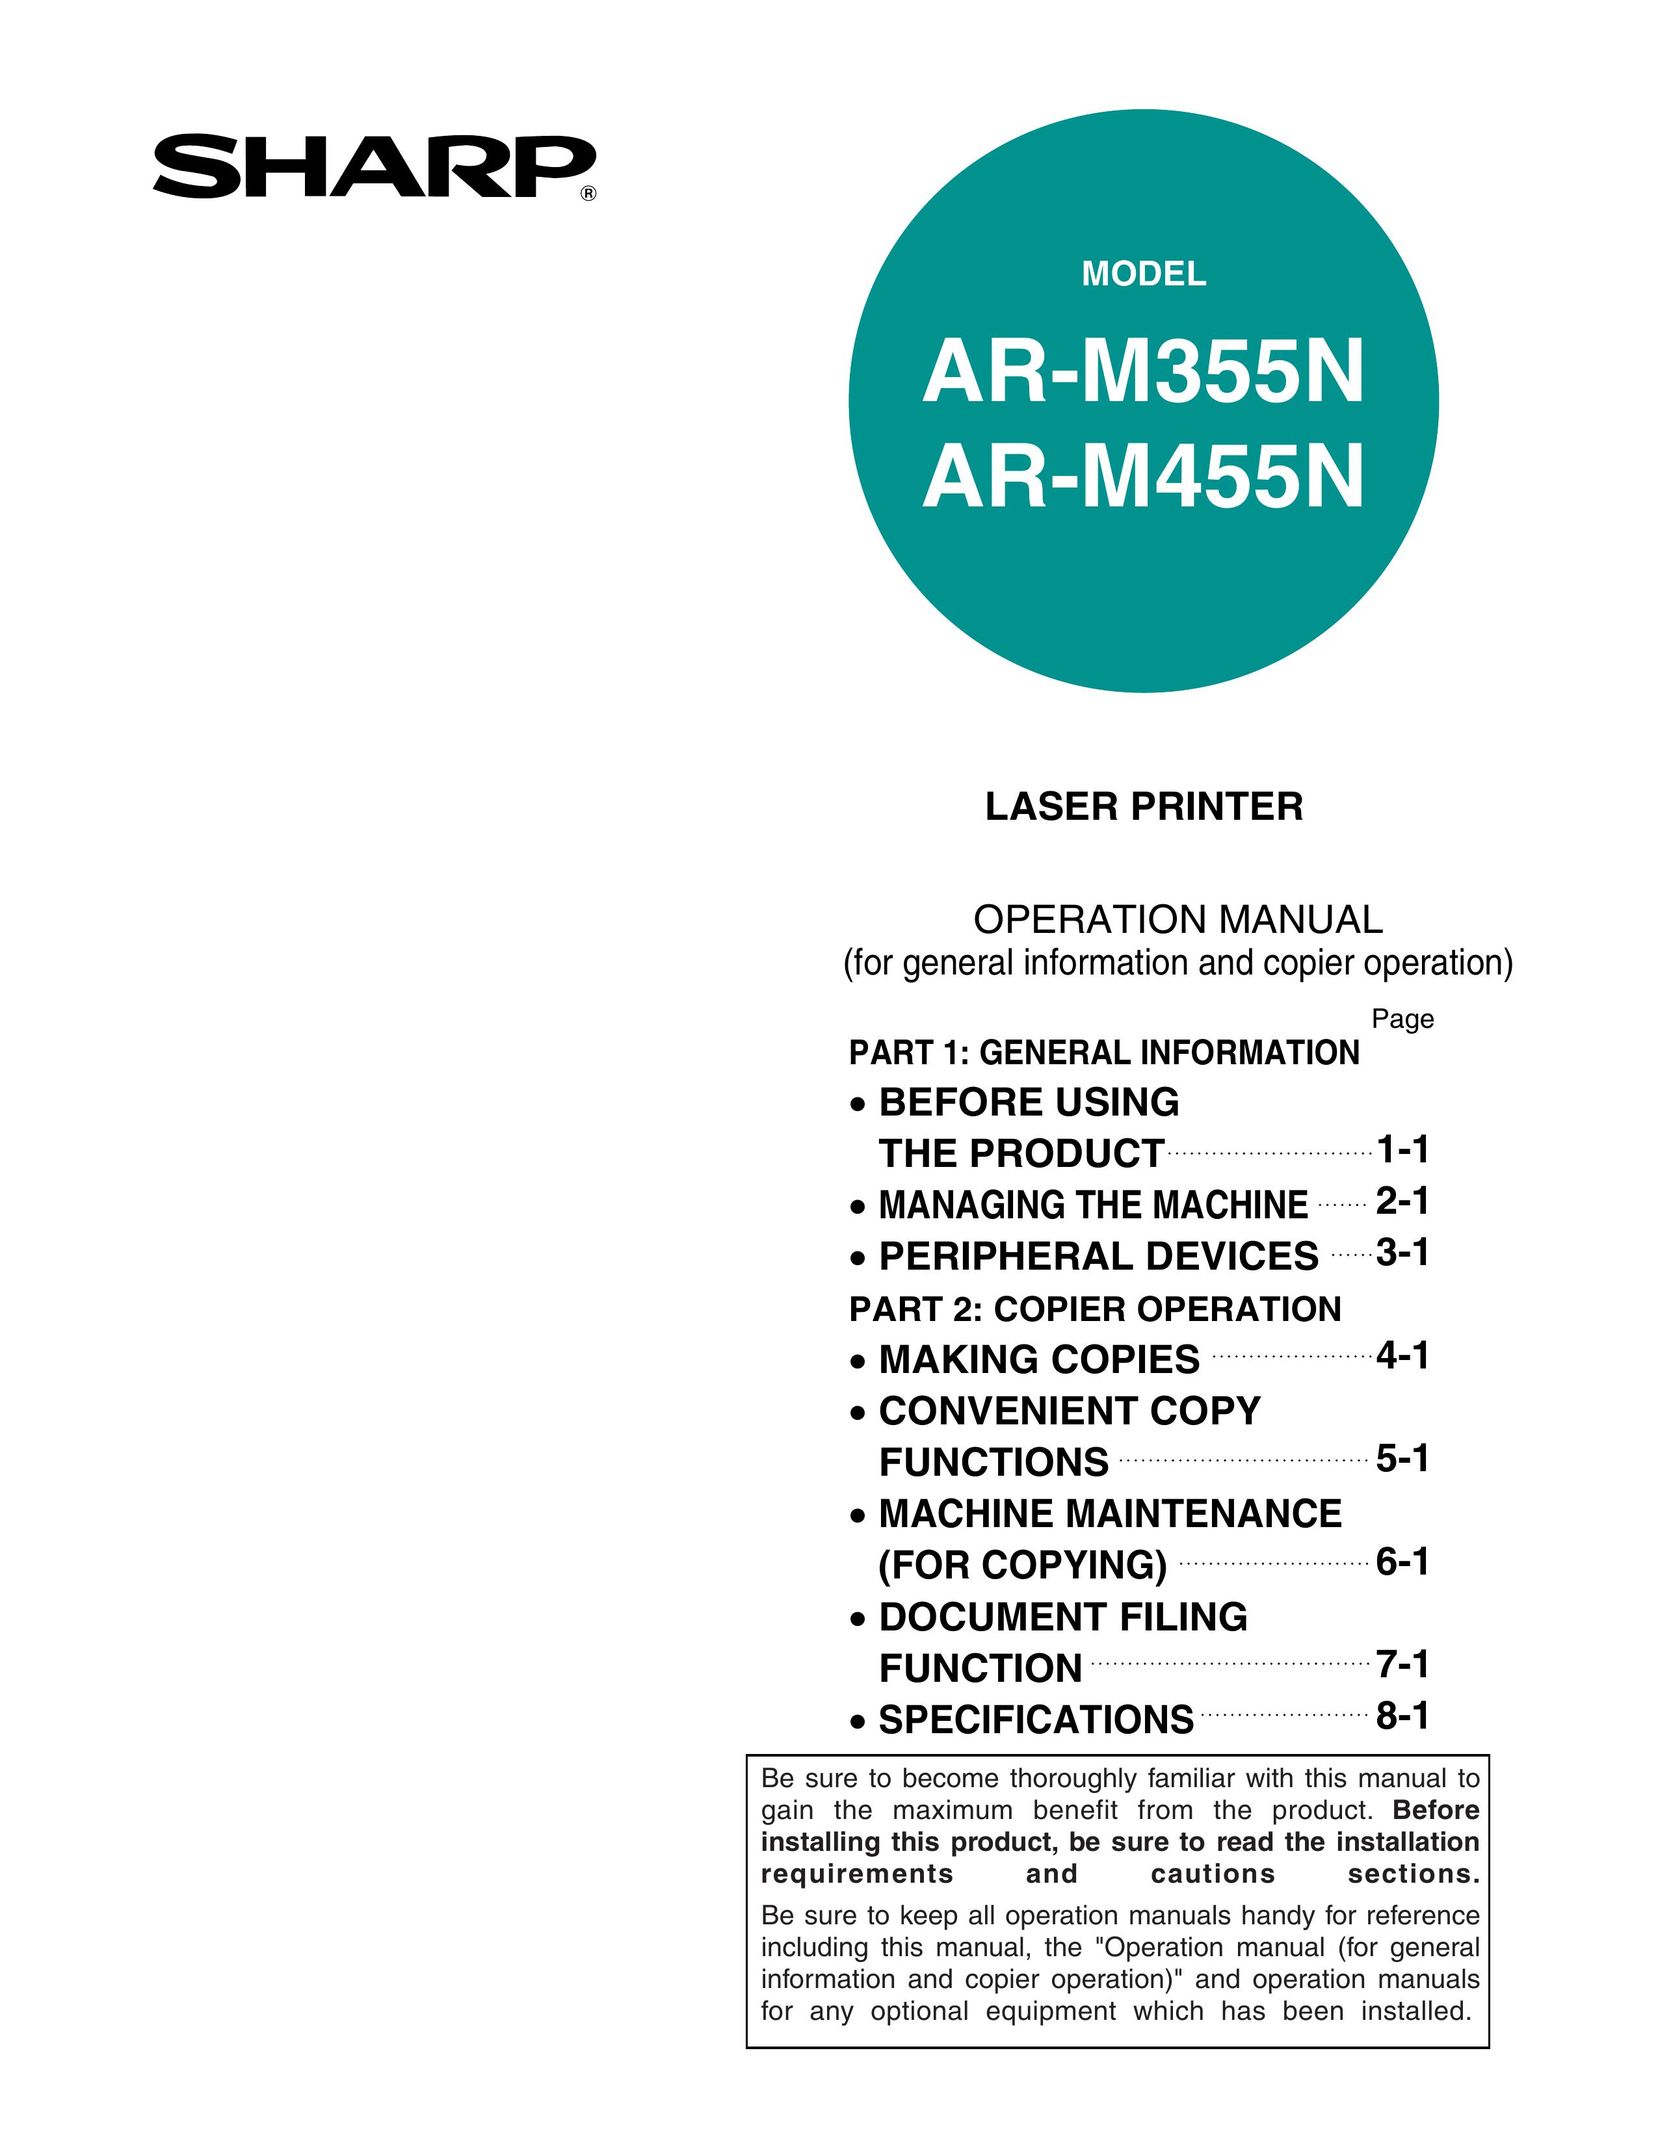 Sharp AR-M355N Printer User Manual